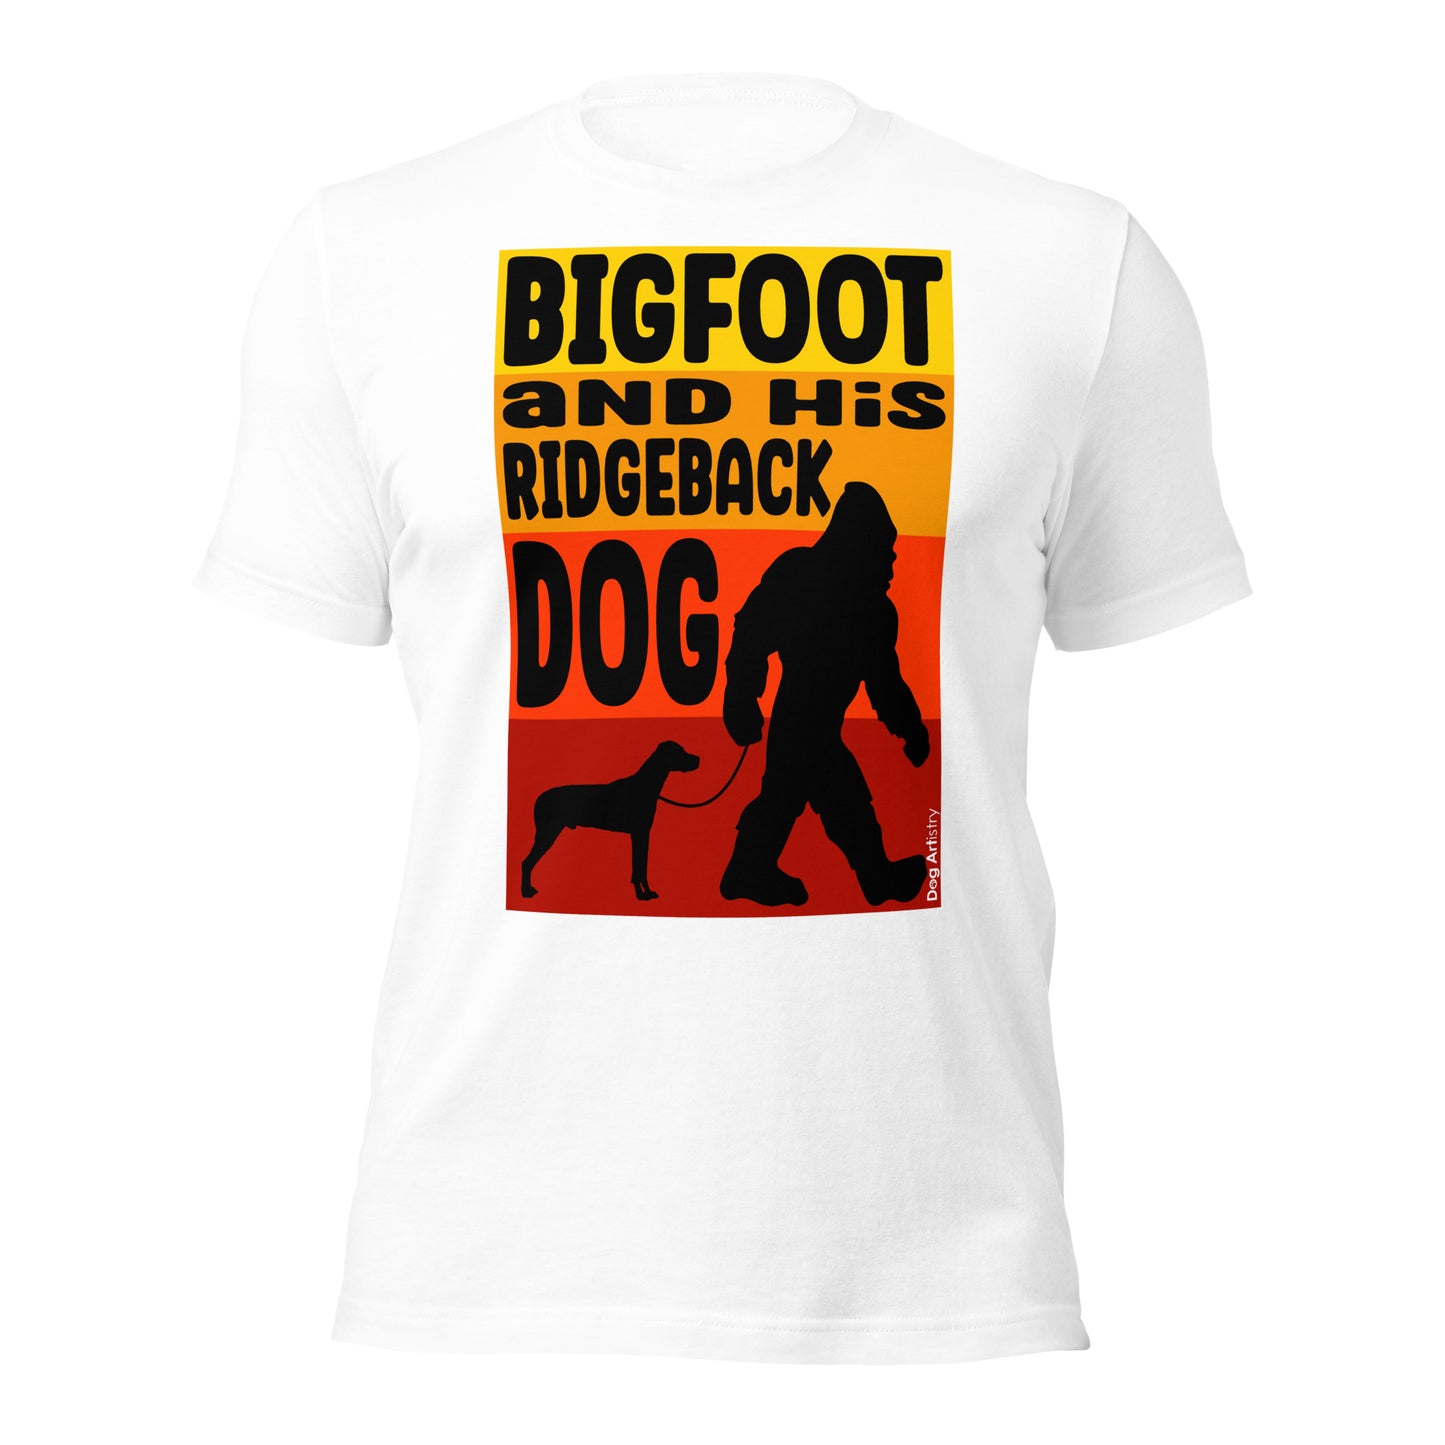 Bigfoot and his Rhodesian Ridgeback unisex white t-shirt by Dog Artistry.